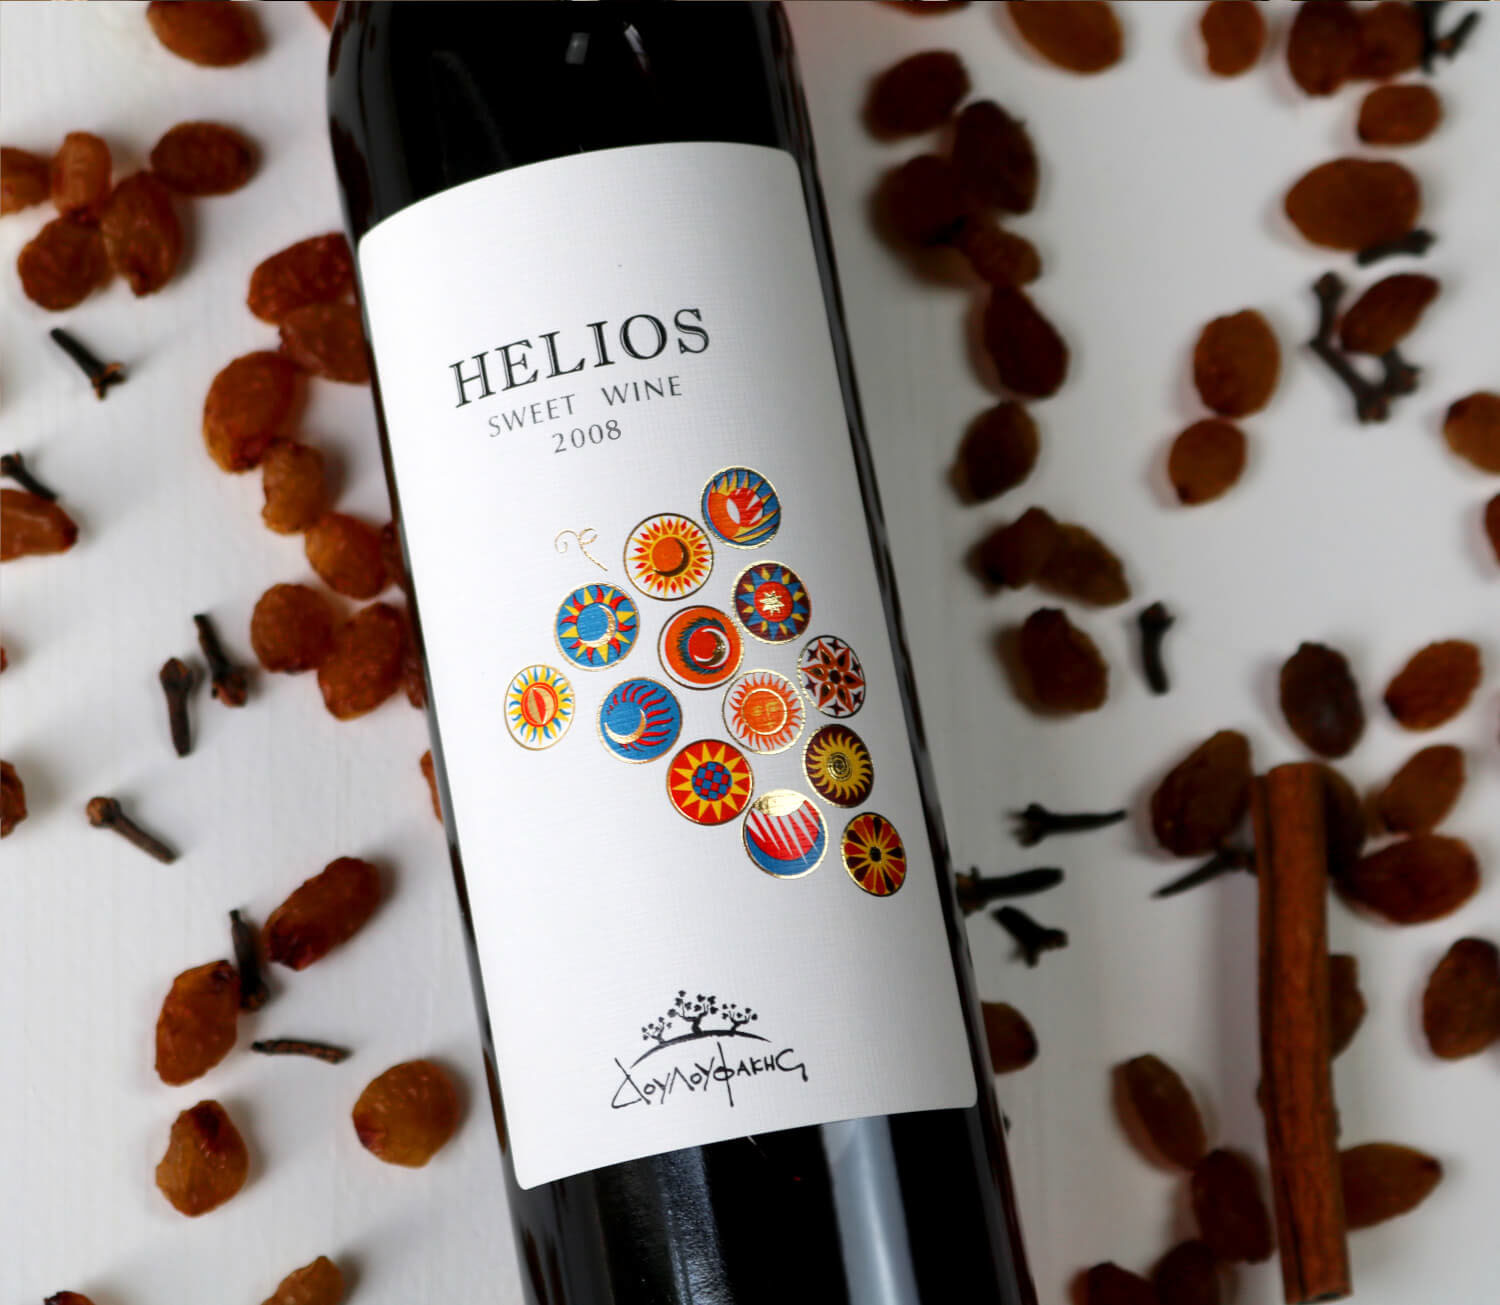 Douloufakis Liatiko grape naturally sweet wine